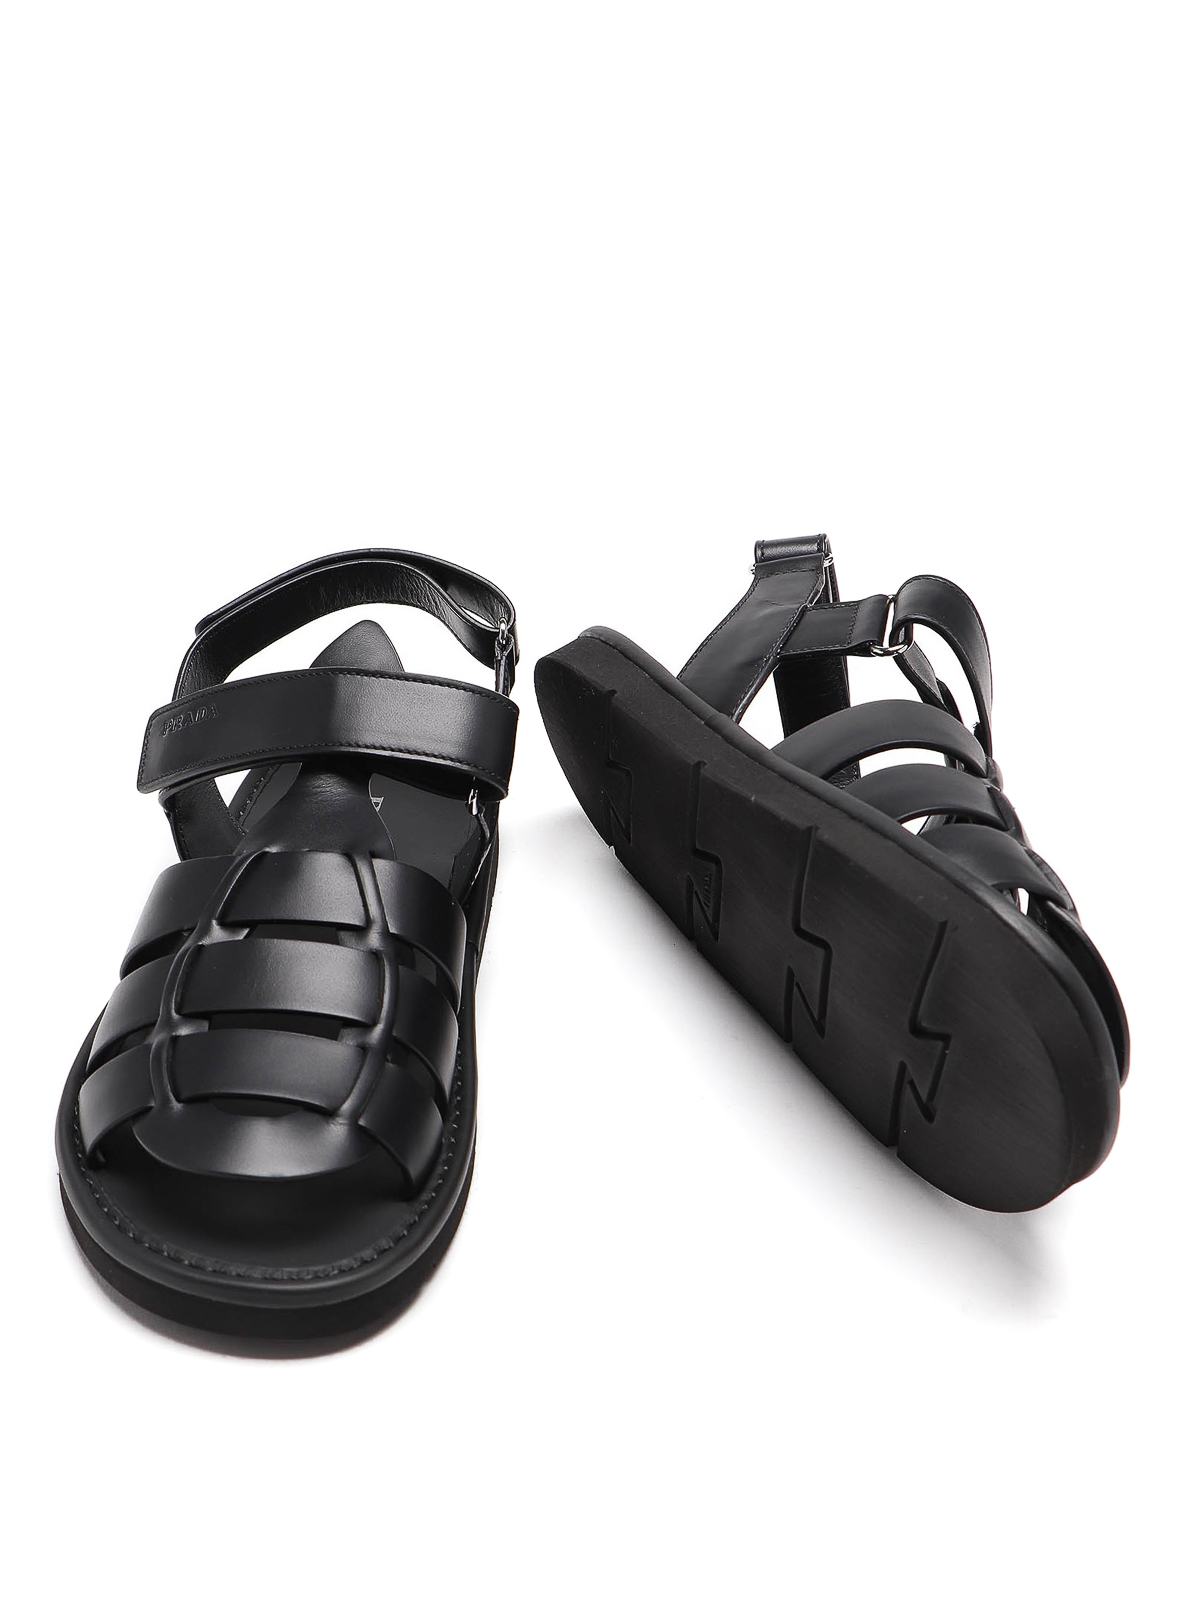 Sandals Prada - Fisherman sandals - 2X3052A21F0002 | Shop online 